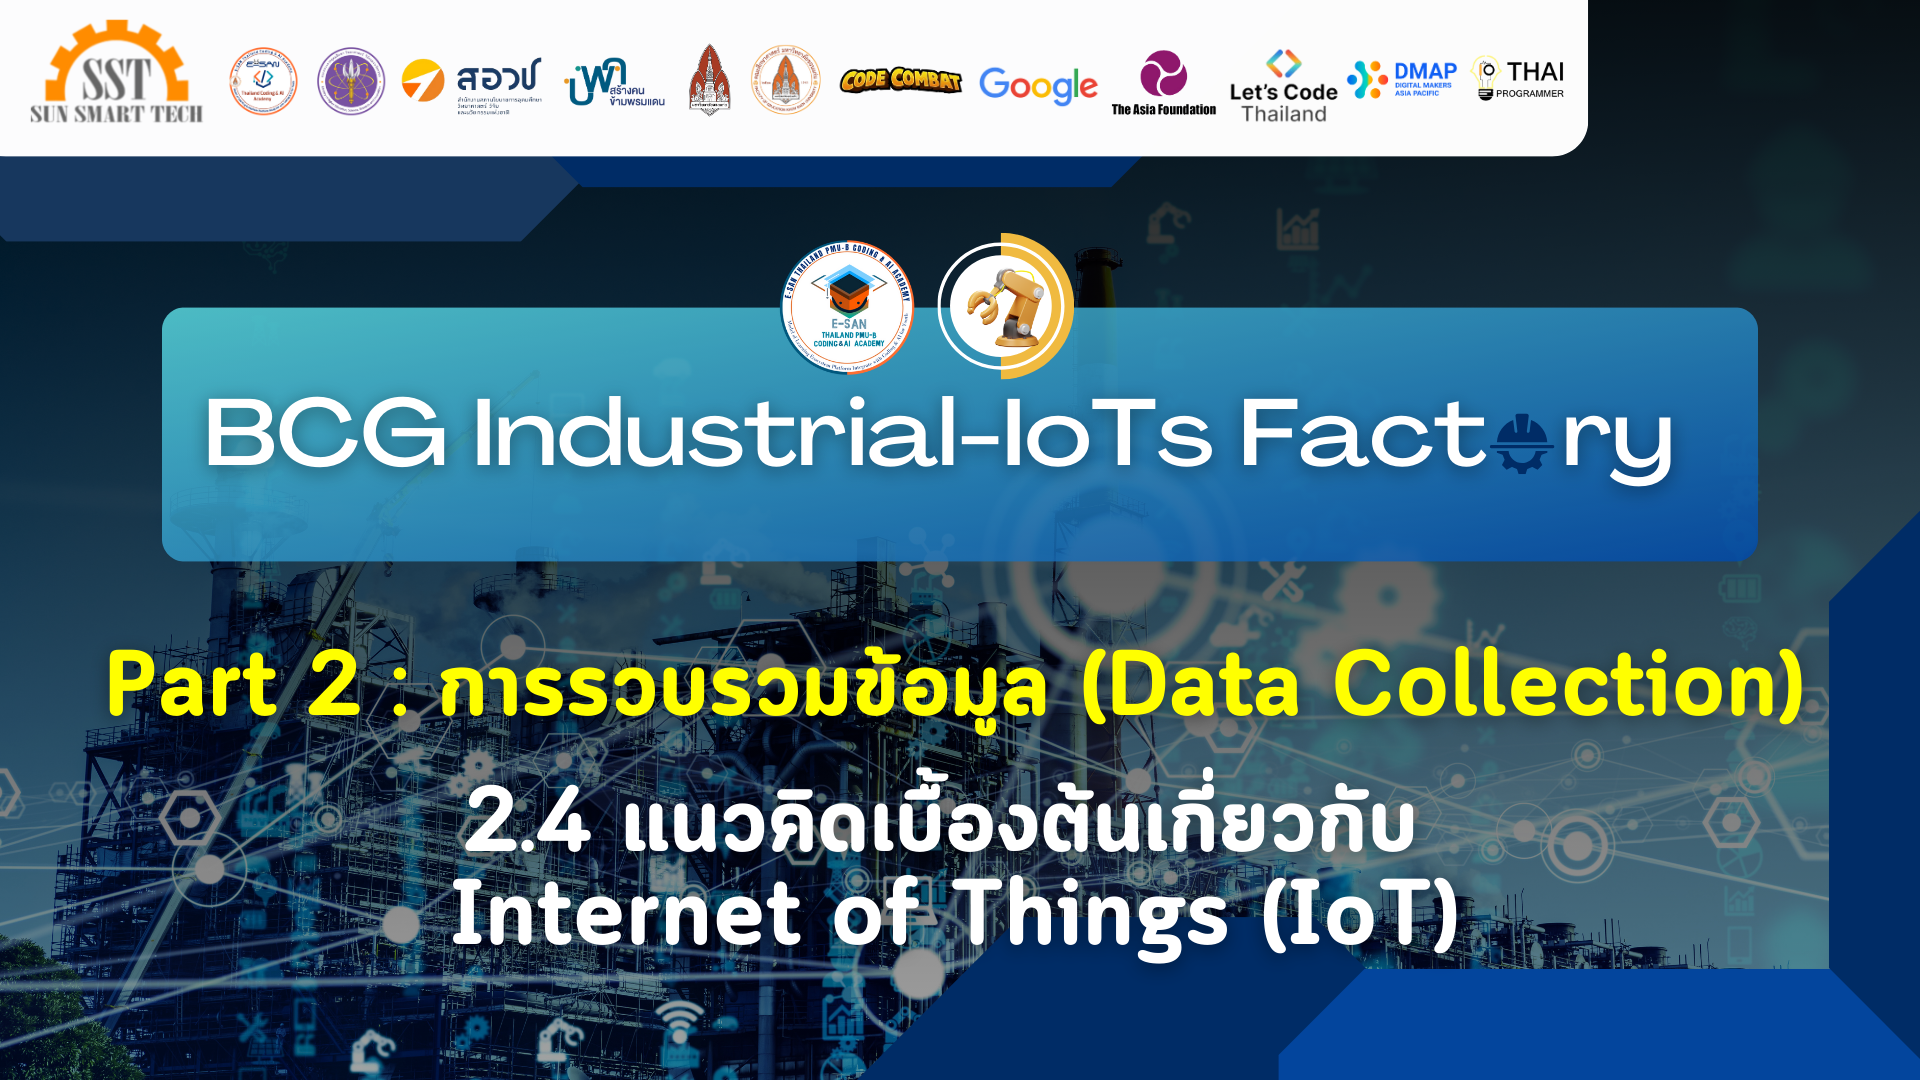 Part 2 : 2.4 แนวคิดเบื้องต้นเกี่ยวกับ Internet of Things (IoT)